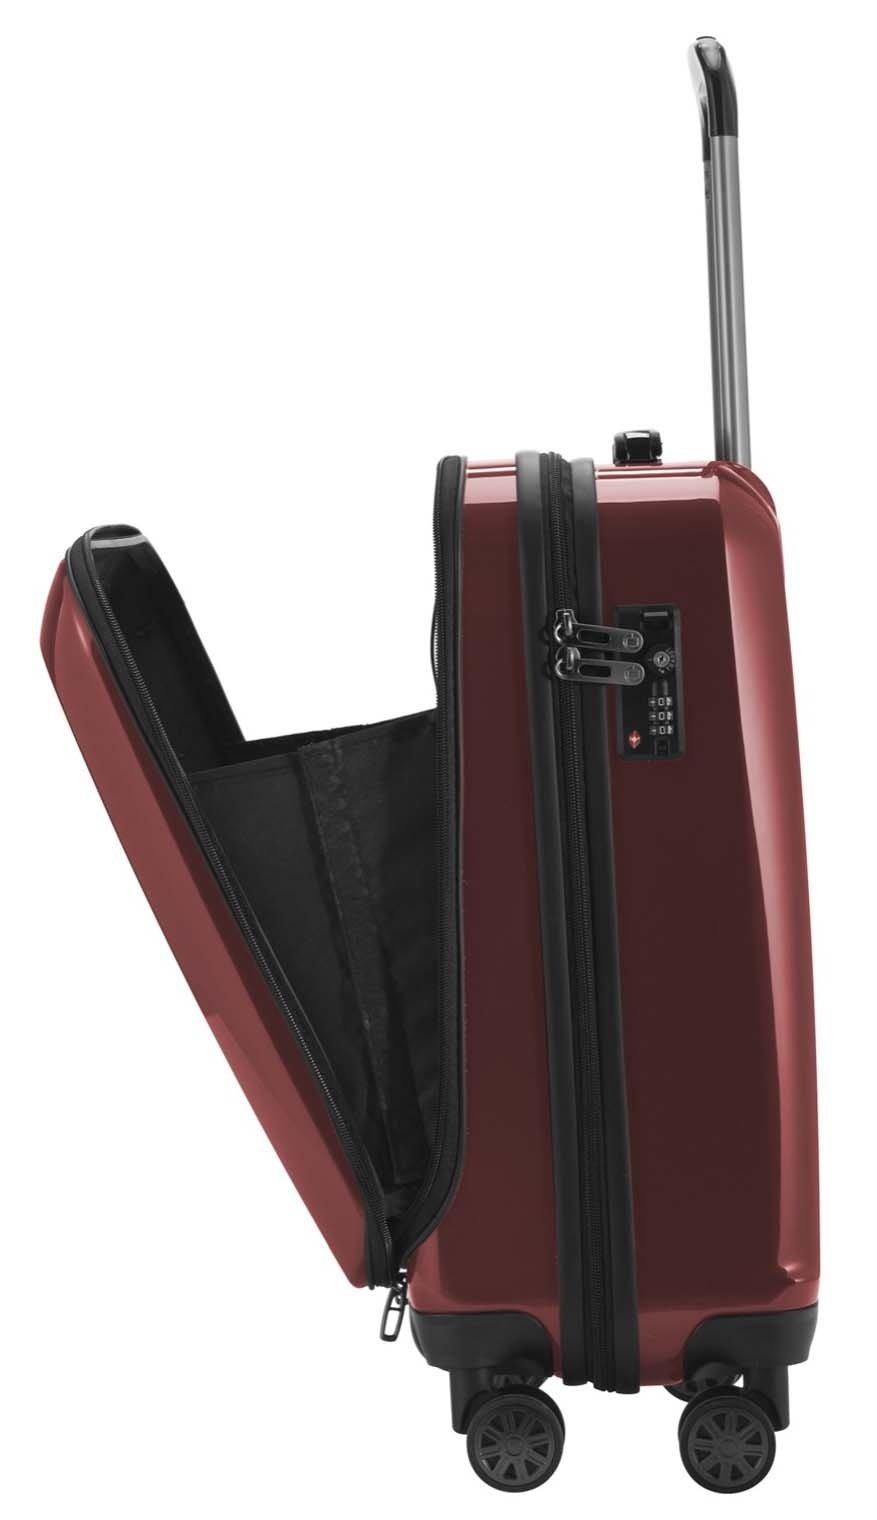 Hauptstadtkoffer ONE SIZE, X-Berg - Handgepäck Hartschale mit TSA  